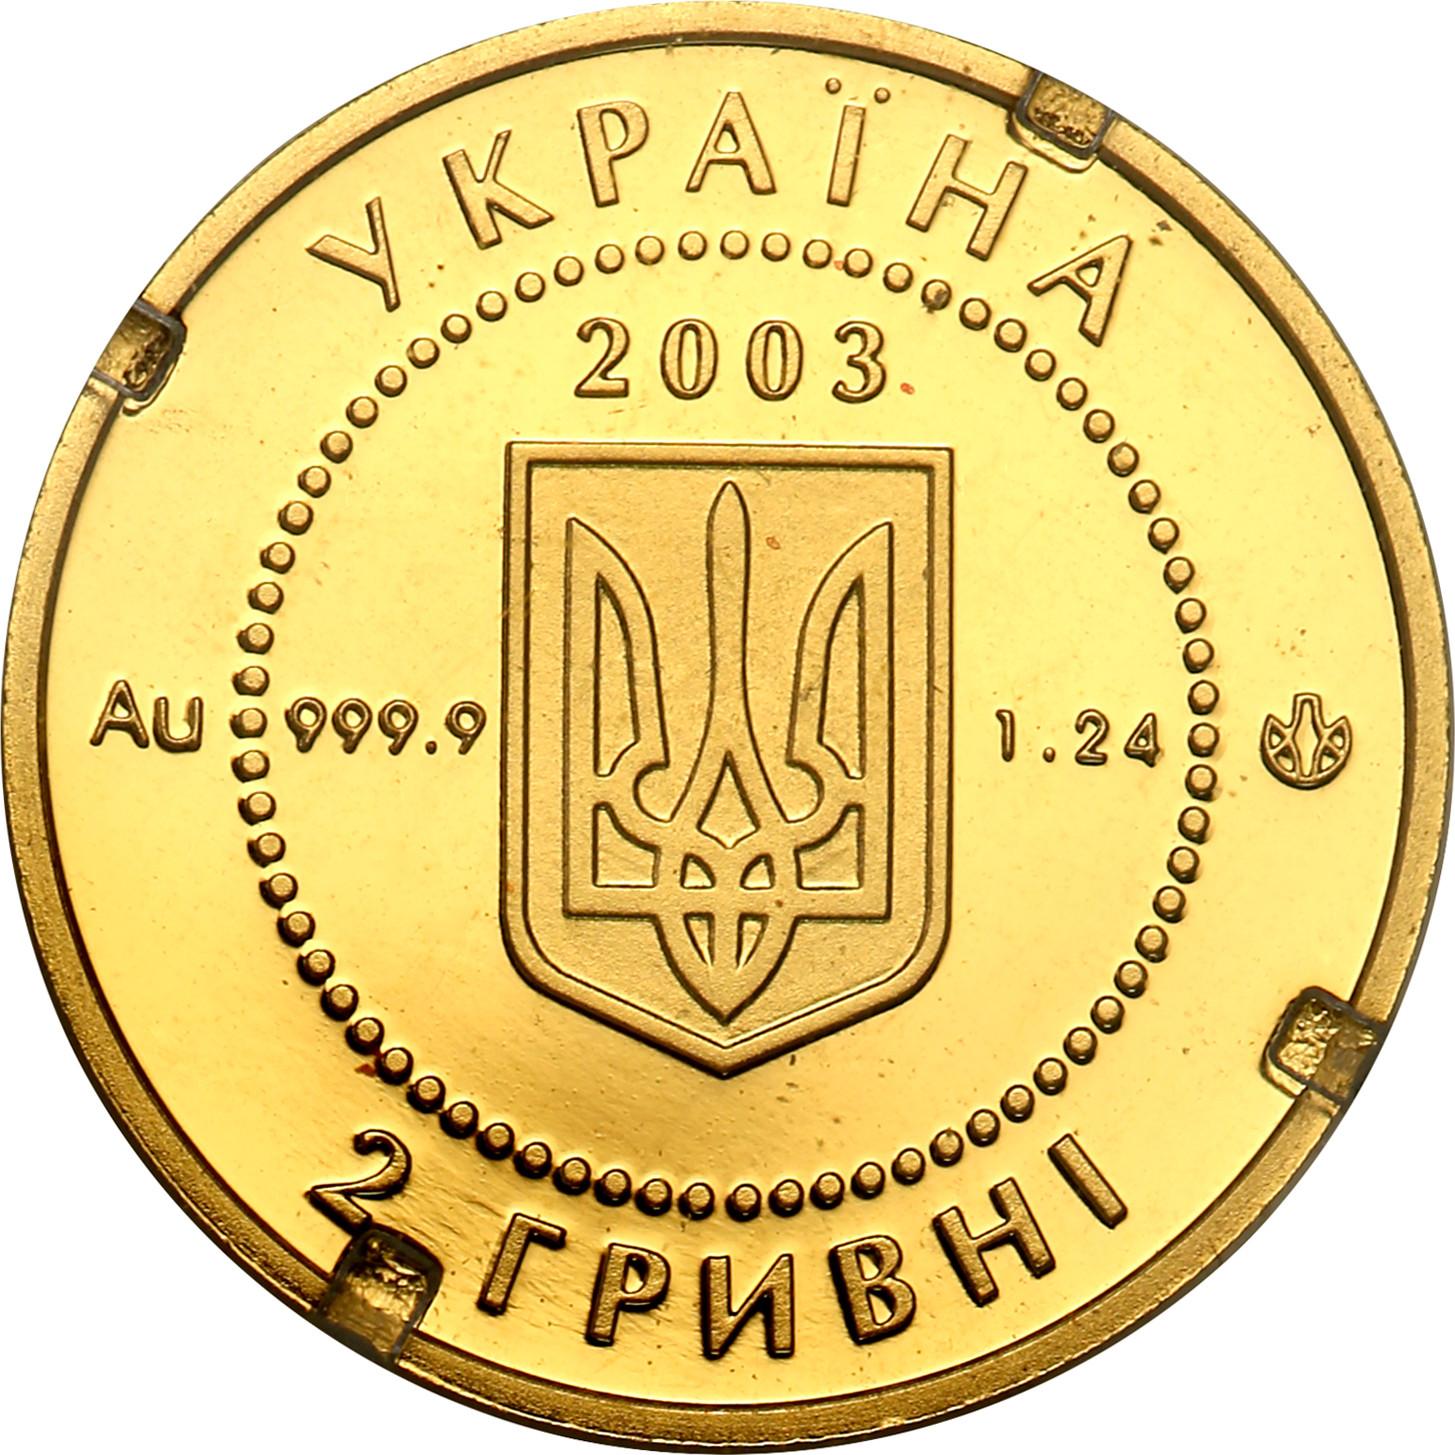 Ukraina 2 hrywny 2003 Salamandra 1/25 uncji czystego złota st. L